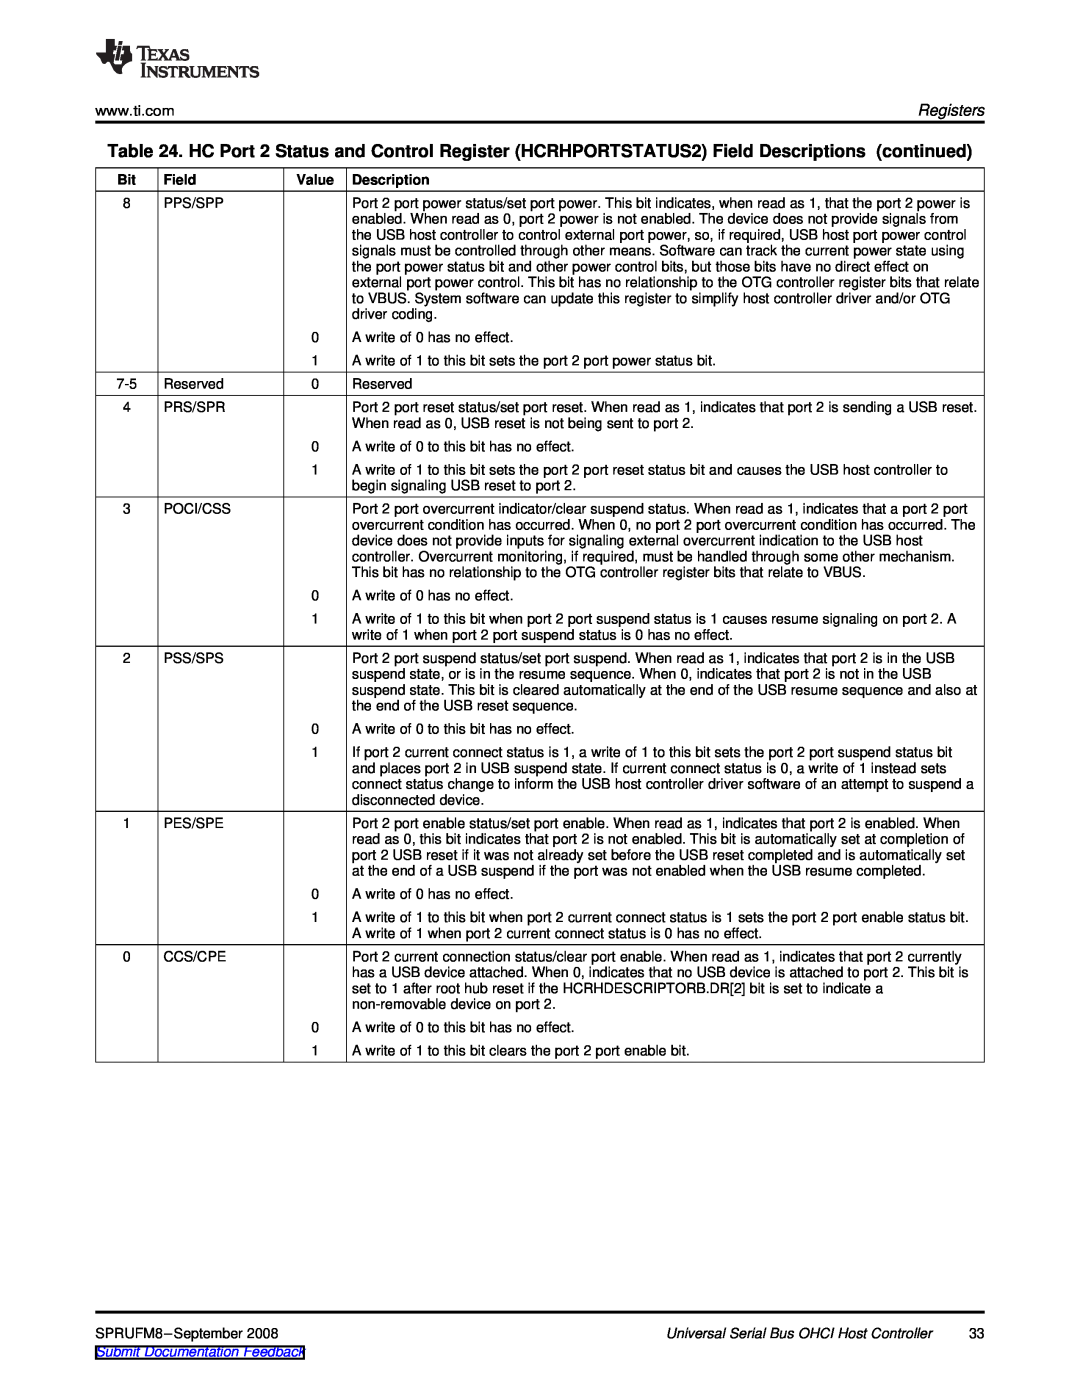 Texas Instruments TMS320C6747 DSP manual Field, Description, Submit Documentation Feedback 